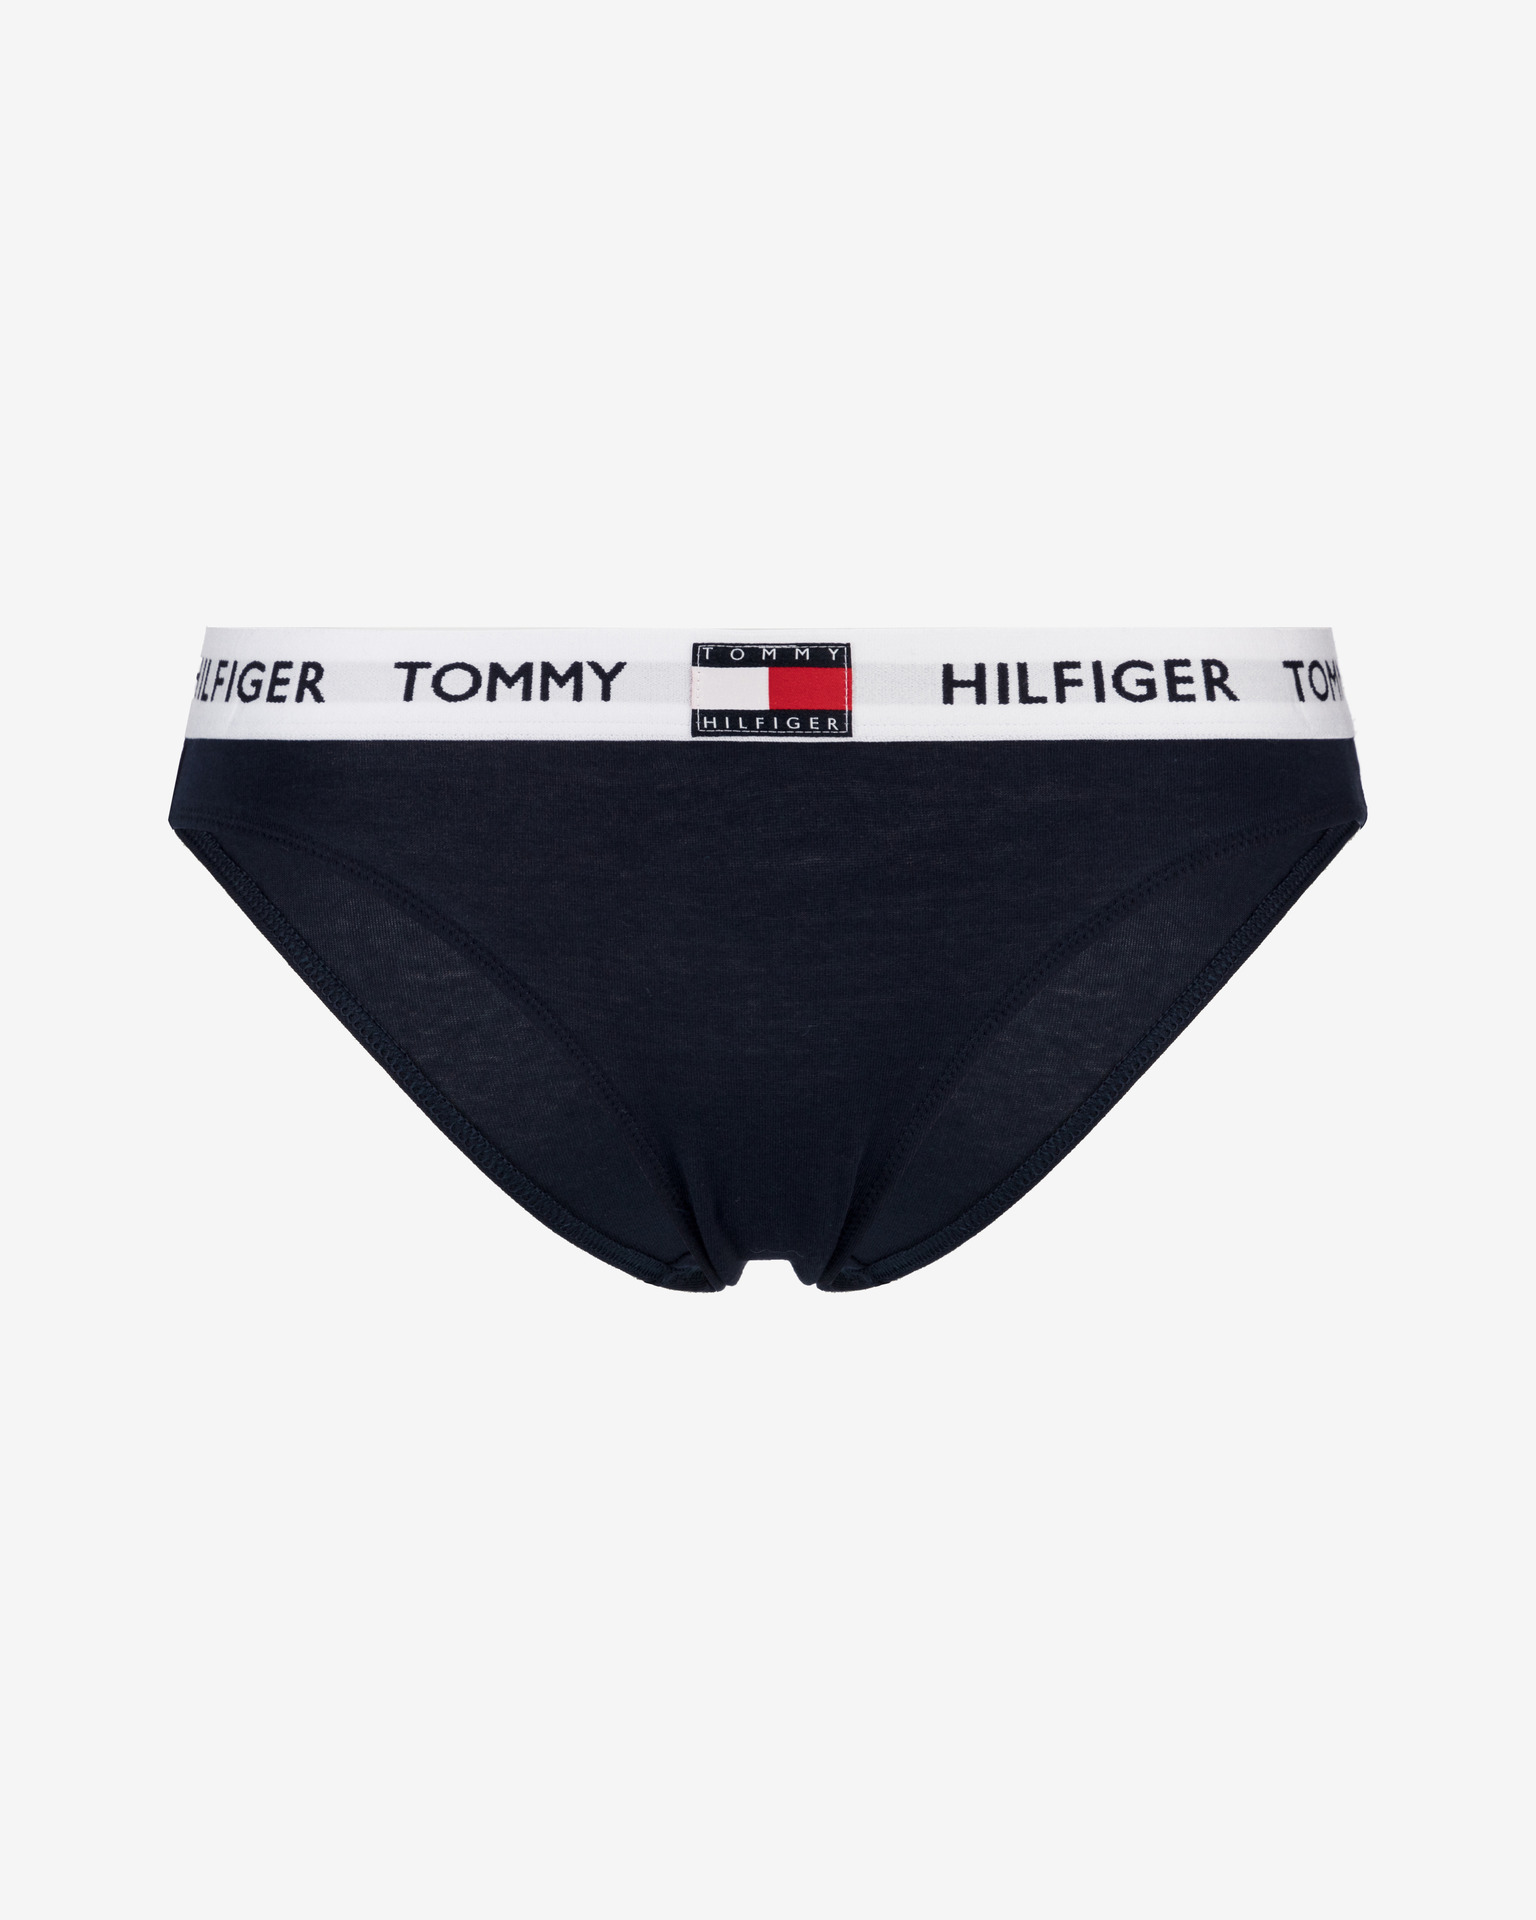 Tommy Hilfiger - Briefs Bibloo.com